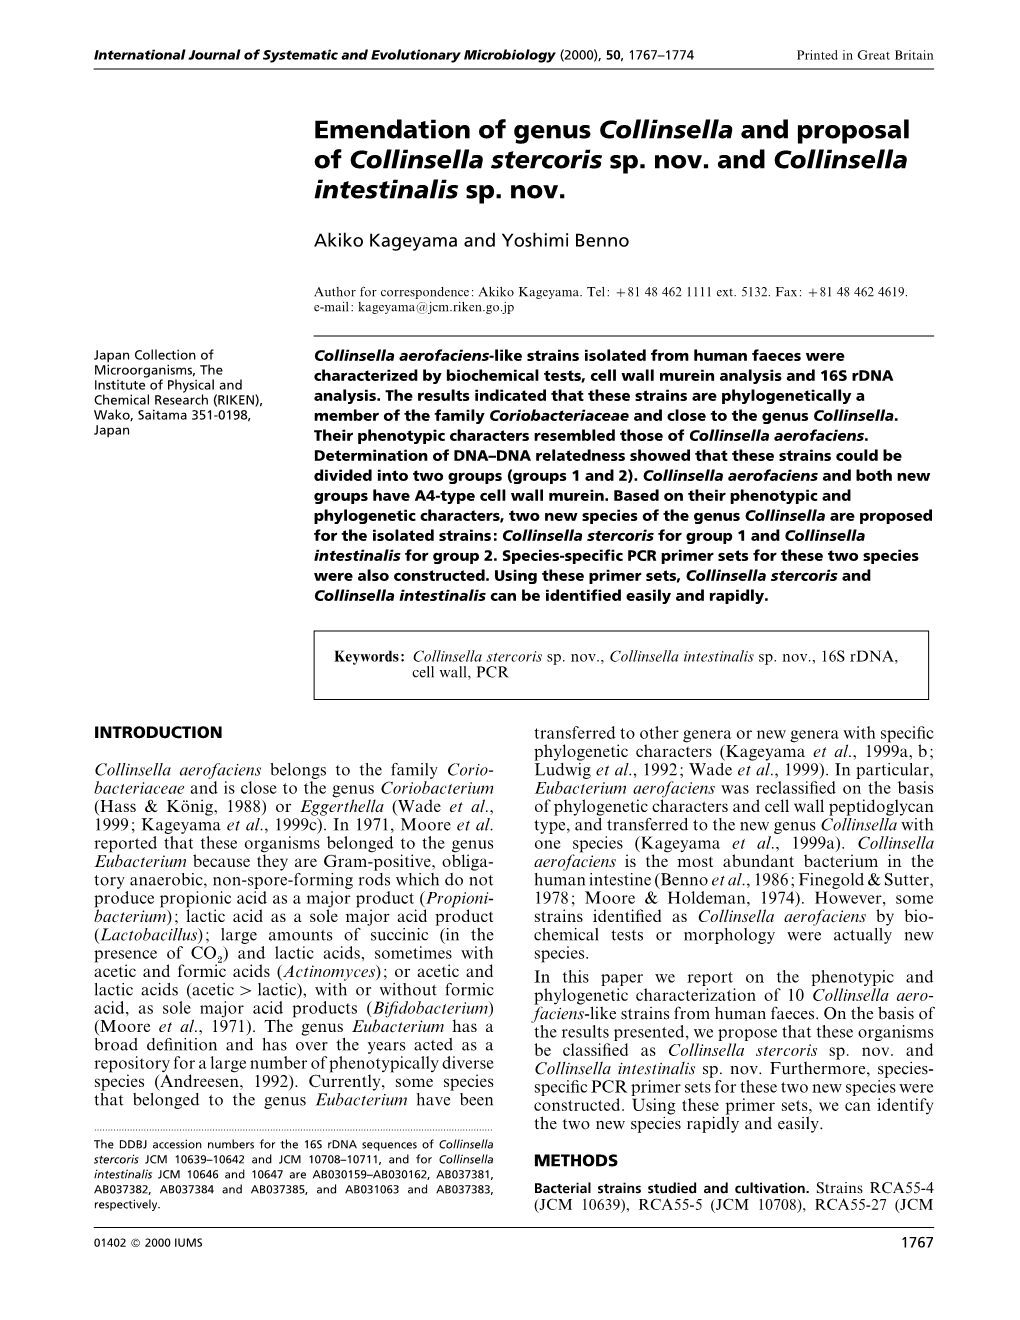 Emendation of Genus Collinsella and Proposal of Collinsella Stercoris Sp. Nov. and Collinsella Intestinalis Sp. Nov